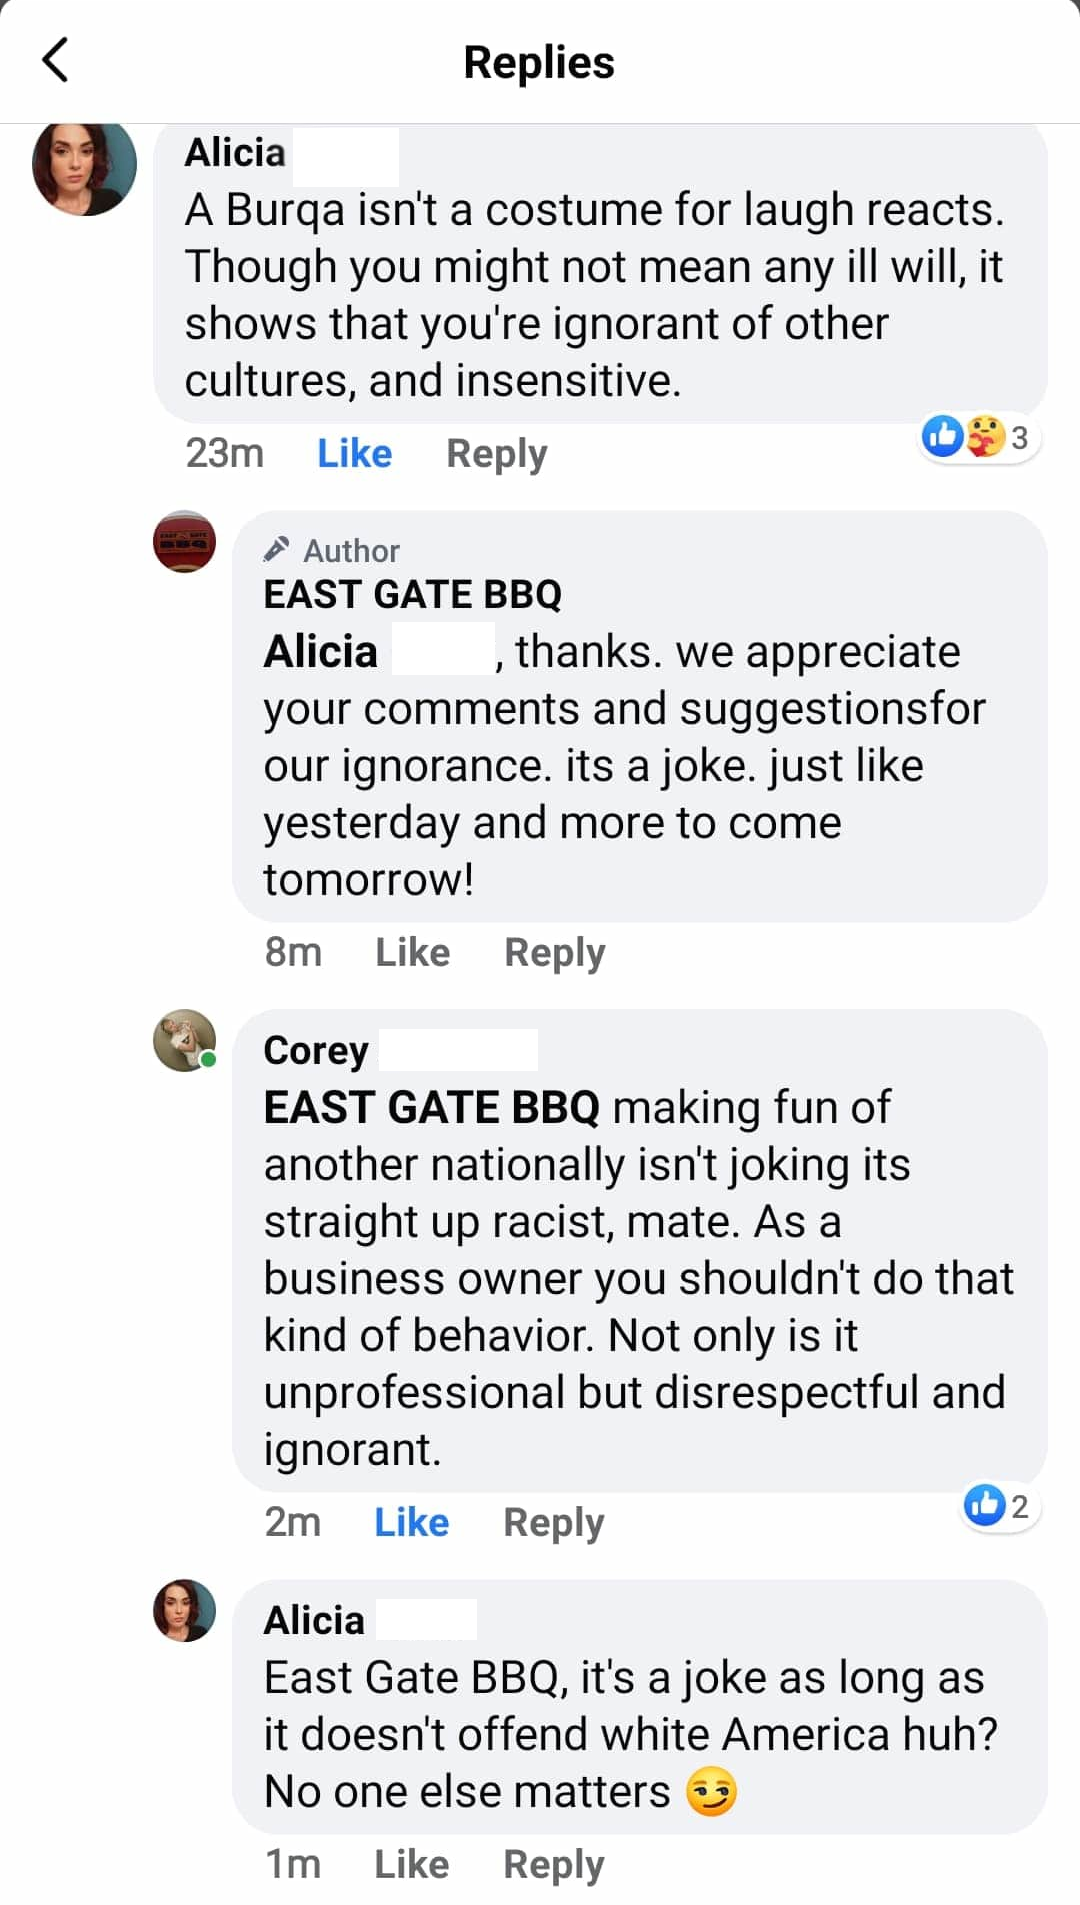 East Gate BBQ's response